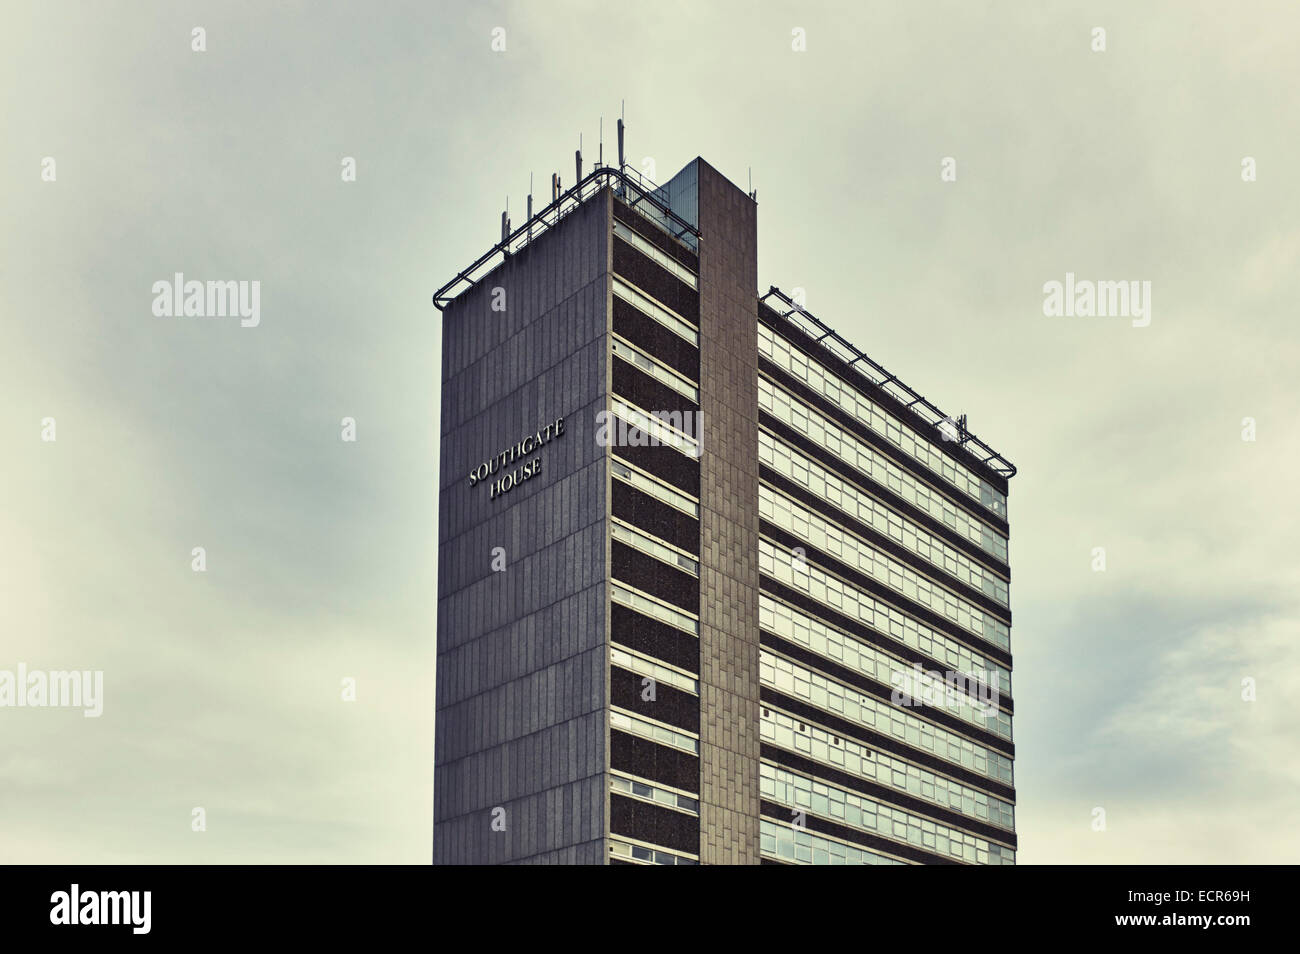 Stevenage tower block building Stock Photo